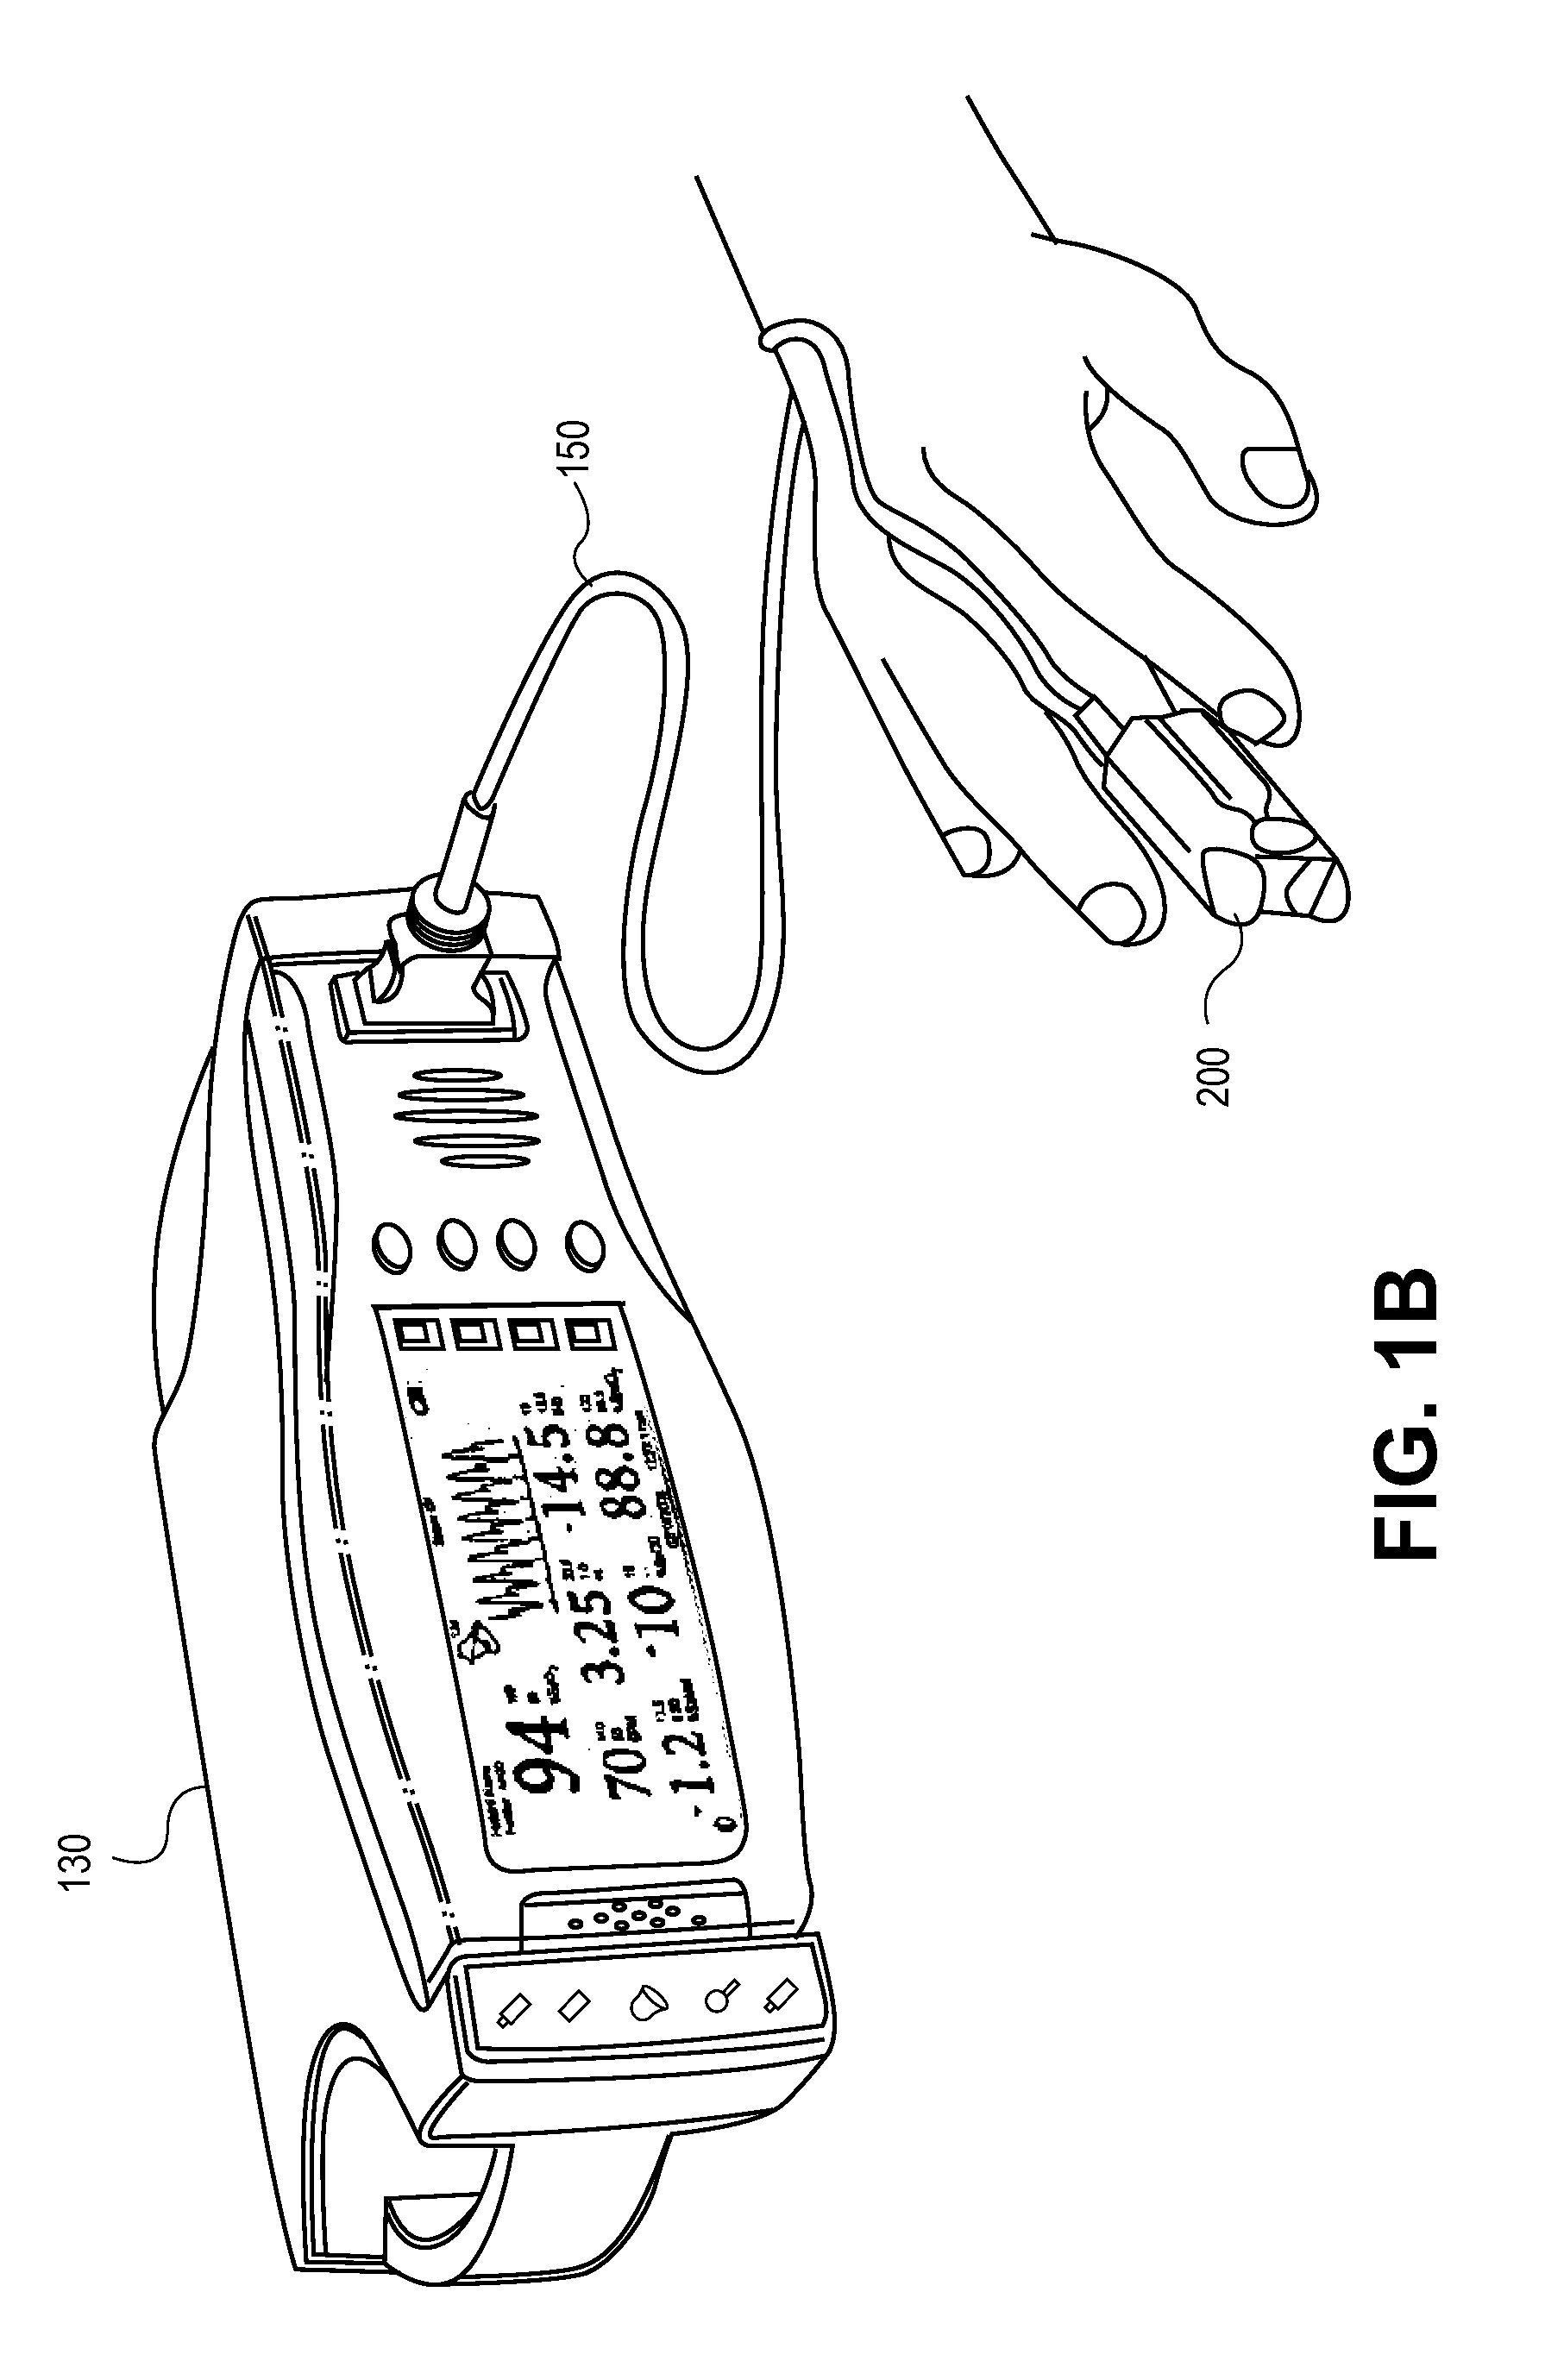 Megnetic electrical connector for patient monitors